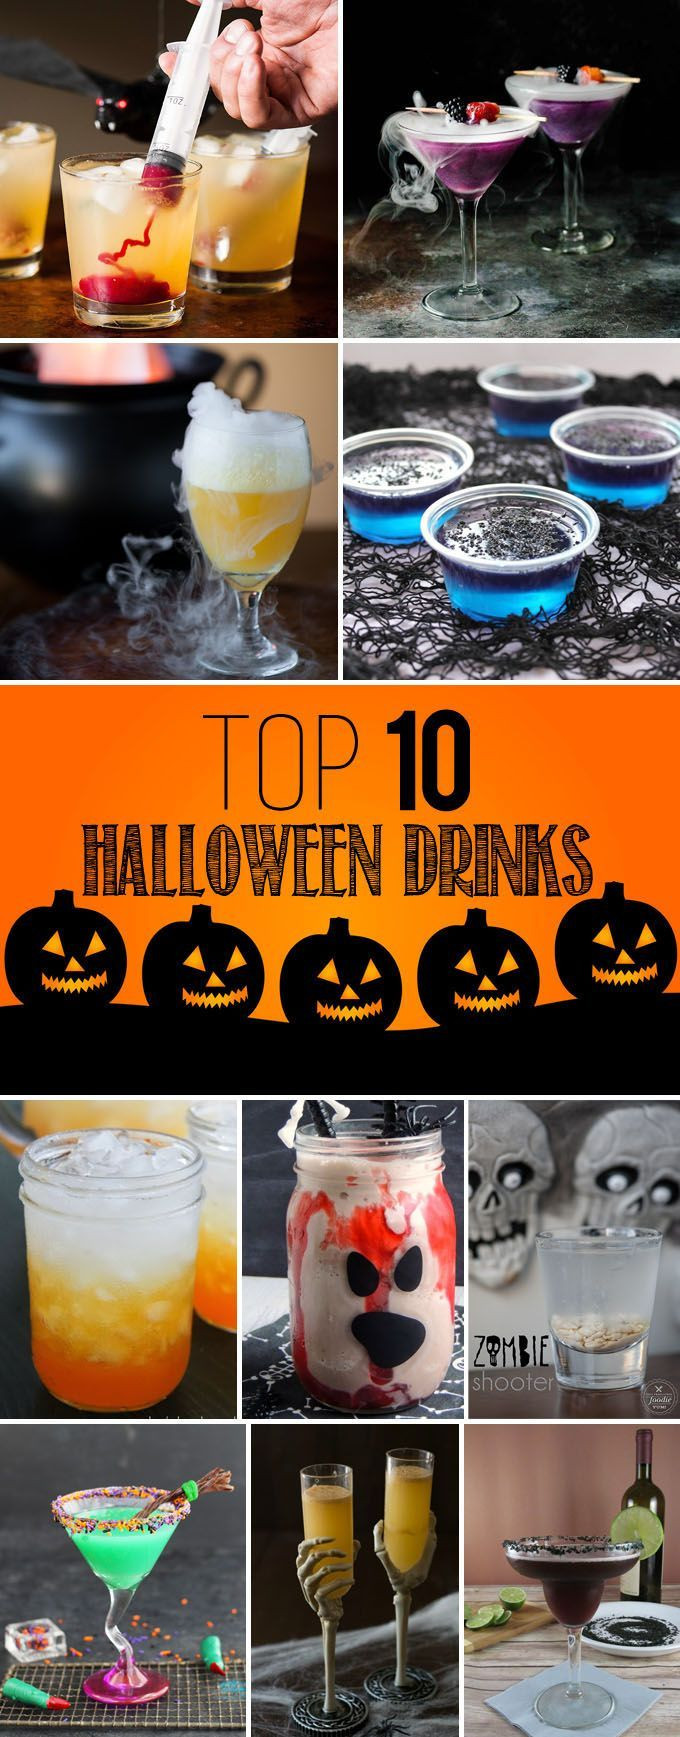 Adult Halloween Drinks
 Best 25 Adult halloween drinks ideas on Pinterest